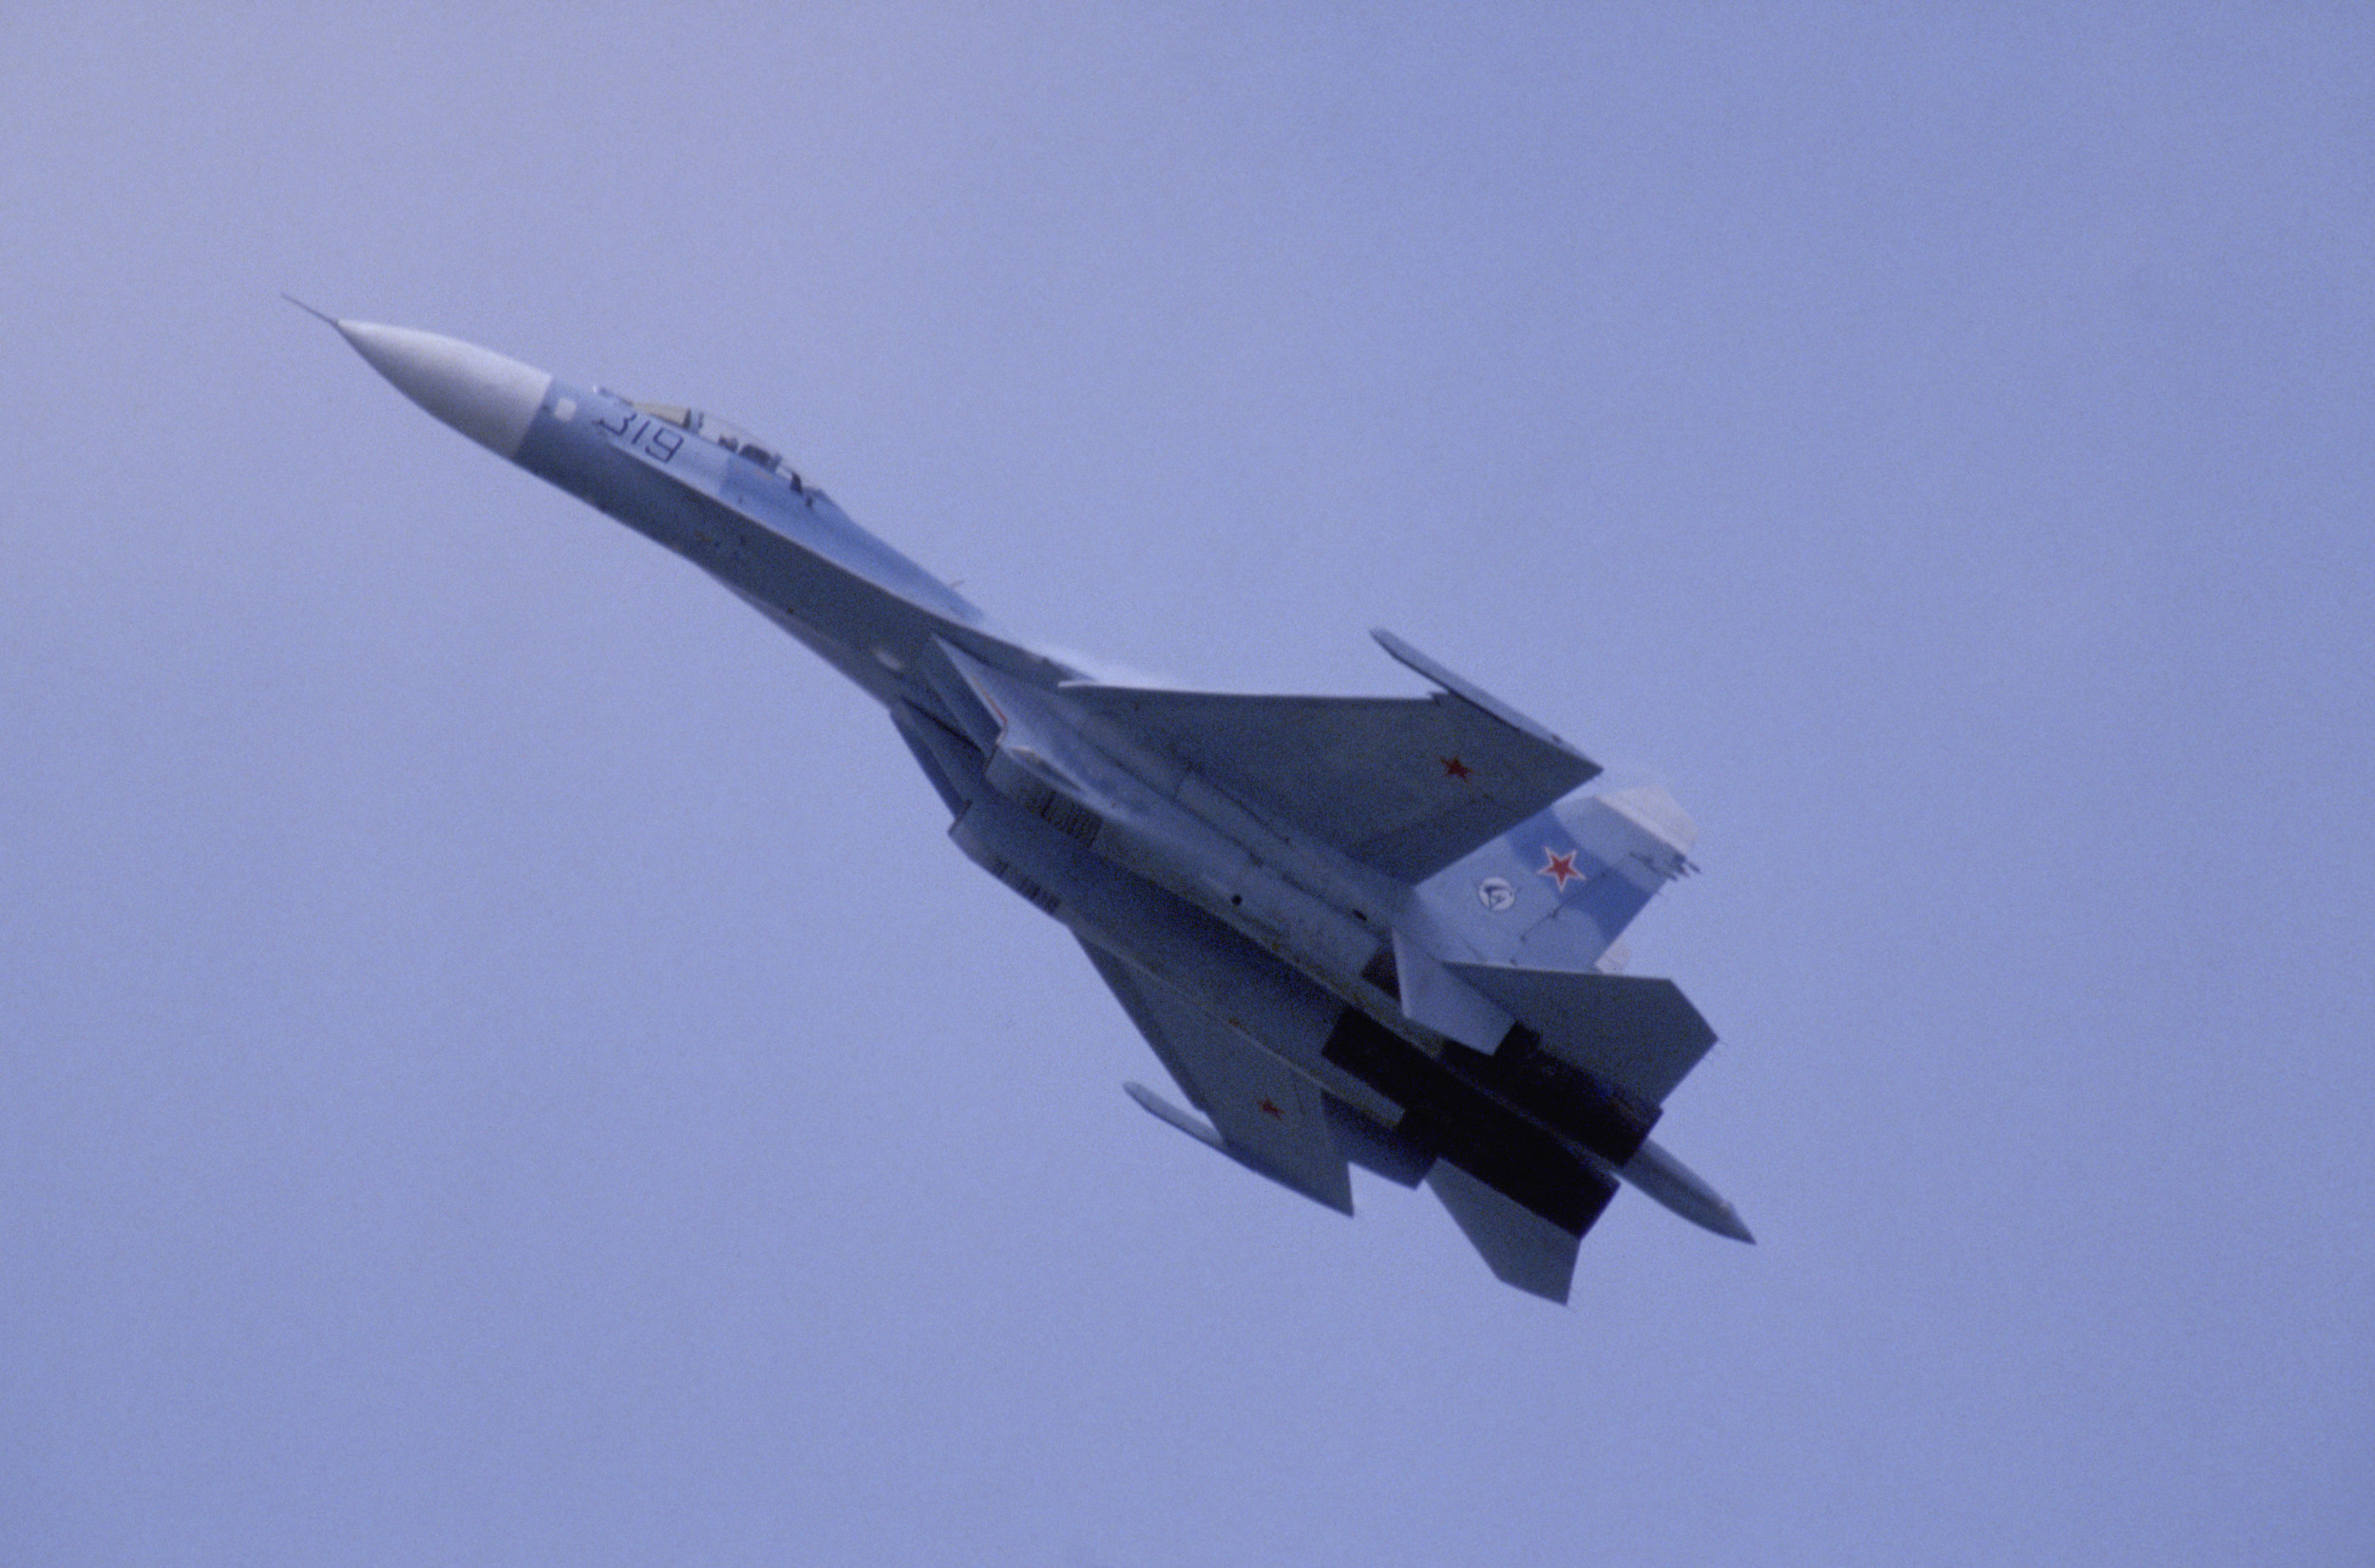 Russia shoots down a Su-27 fighter jet over the Black Sea: Kiev